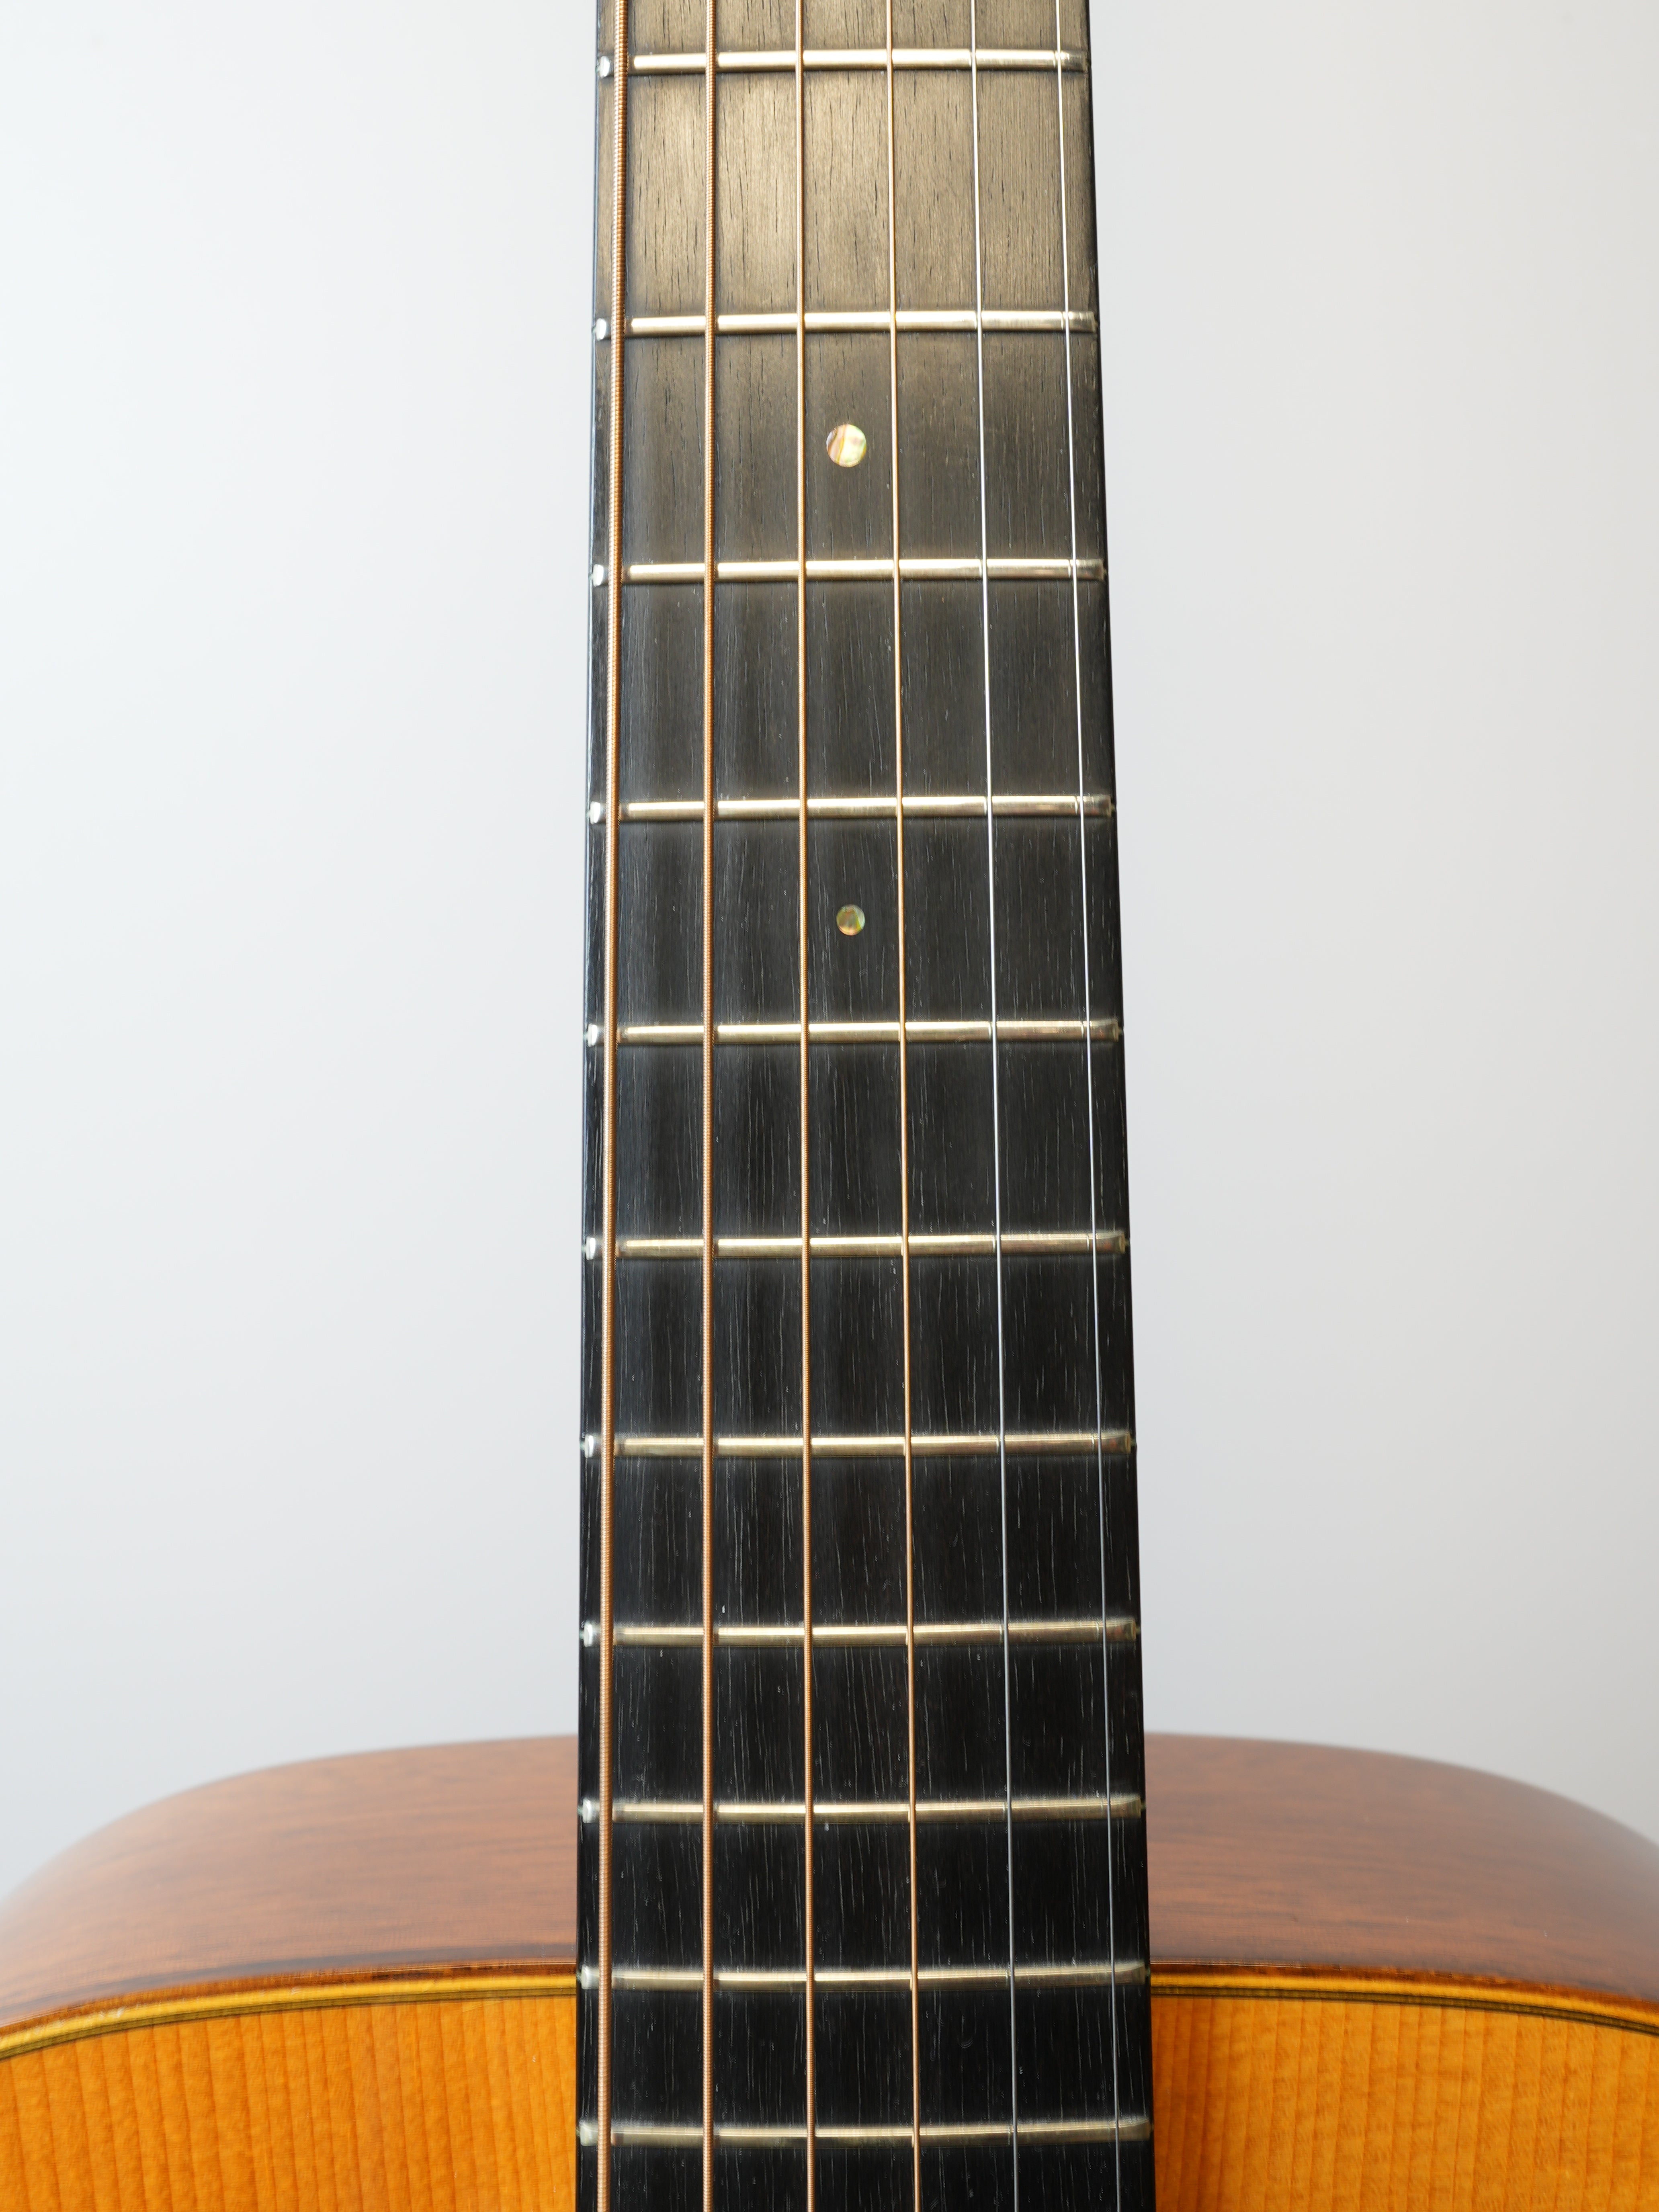 MARTIN OM-18 Golden Era 1930 2005年製 – Sincere Guitars